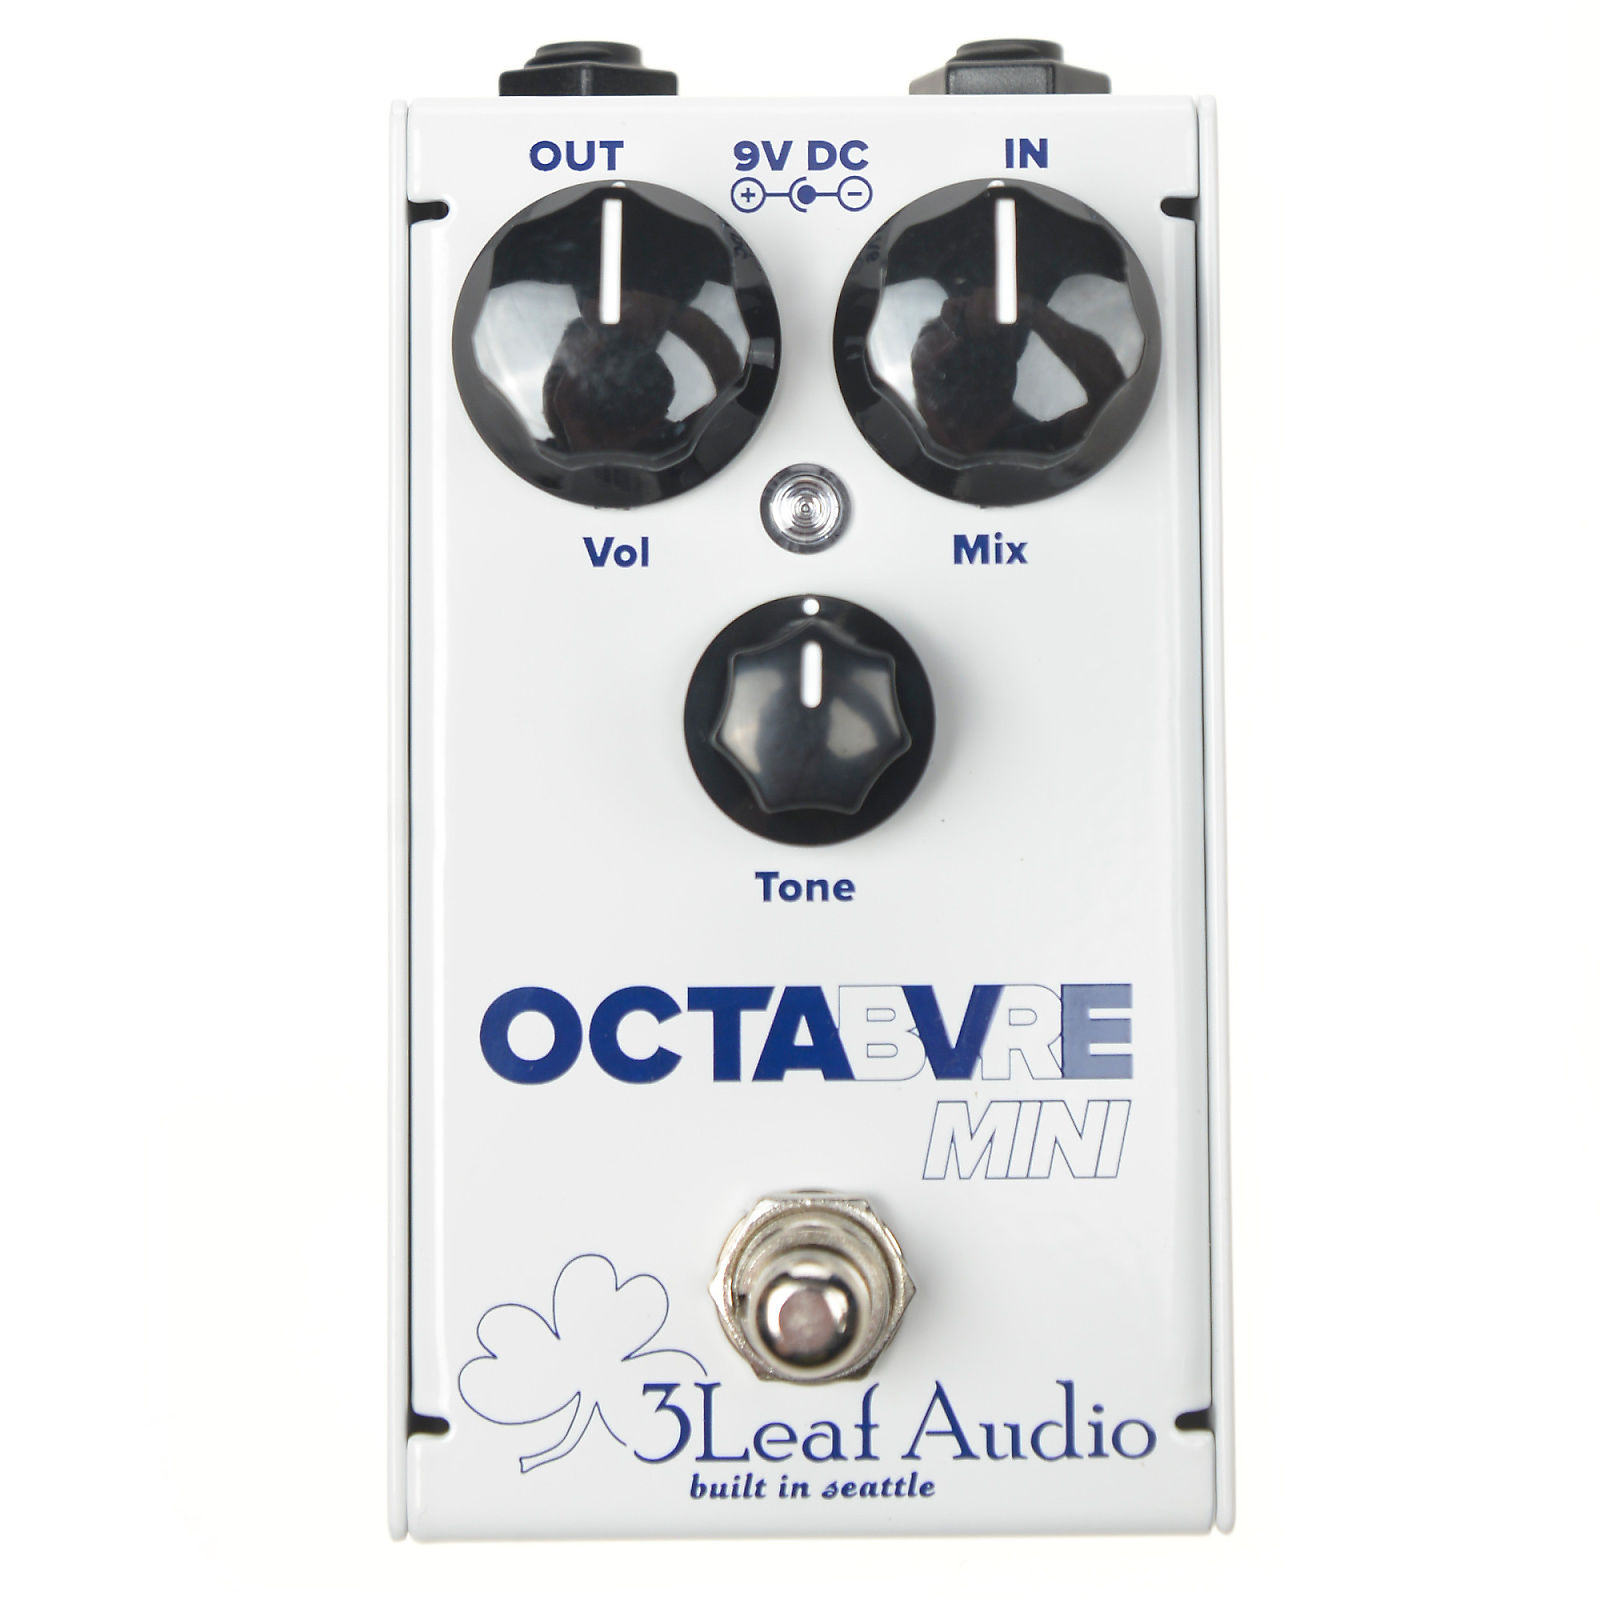 3leaf audio octabvre mini オクターバー 世界99台限定楽器・機材 - ベース